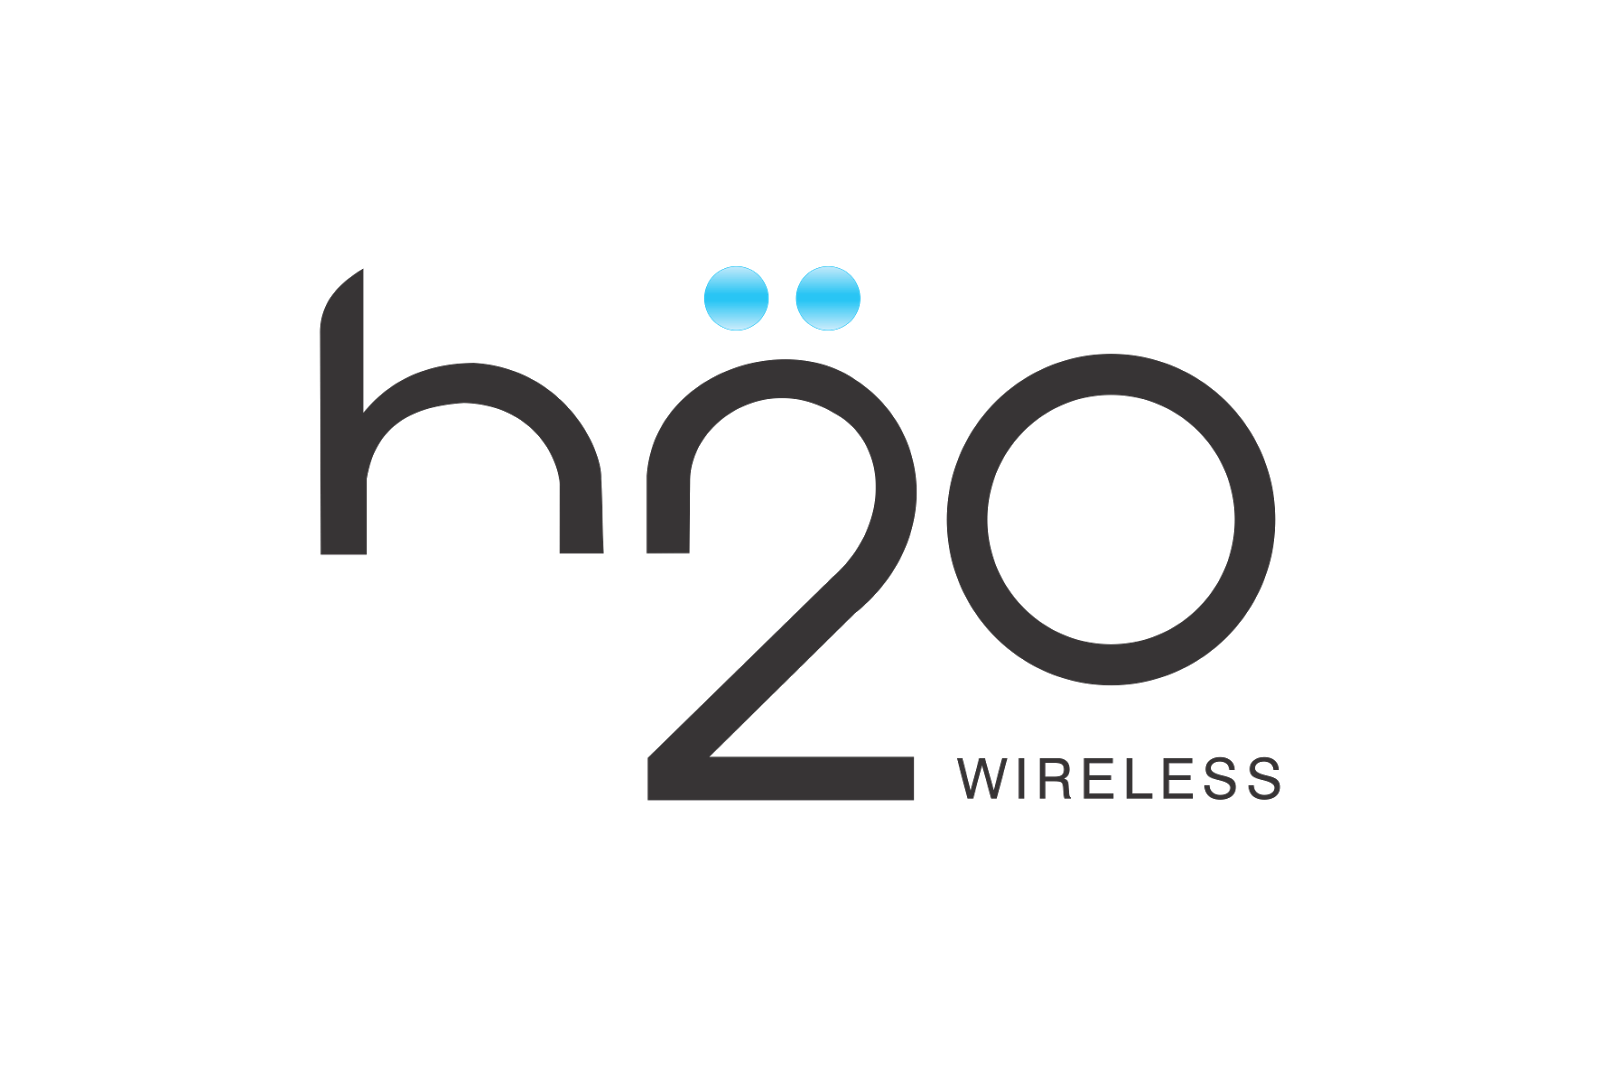 H2o Wireless. Логотип o2. H2o2. H2o бренд одежды.